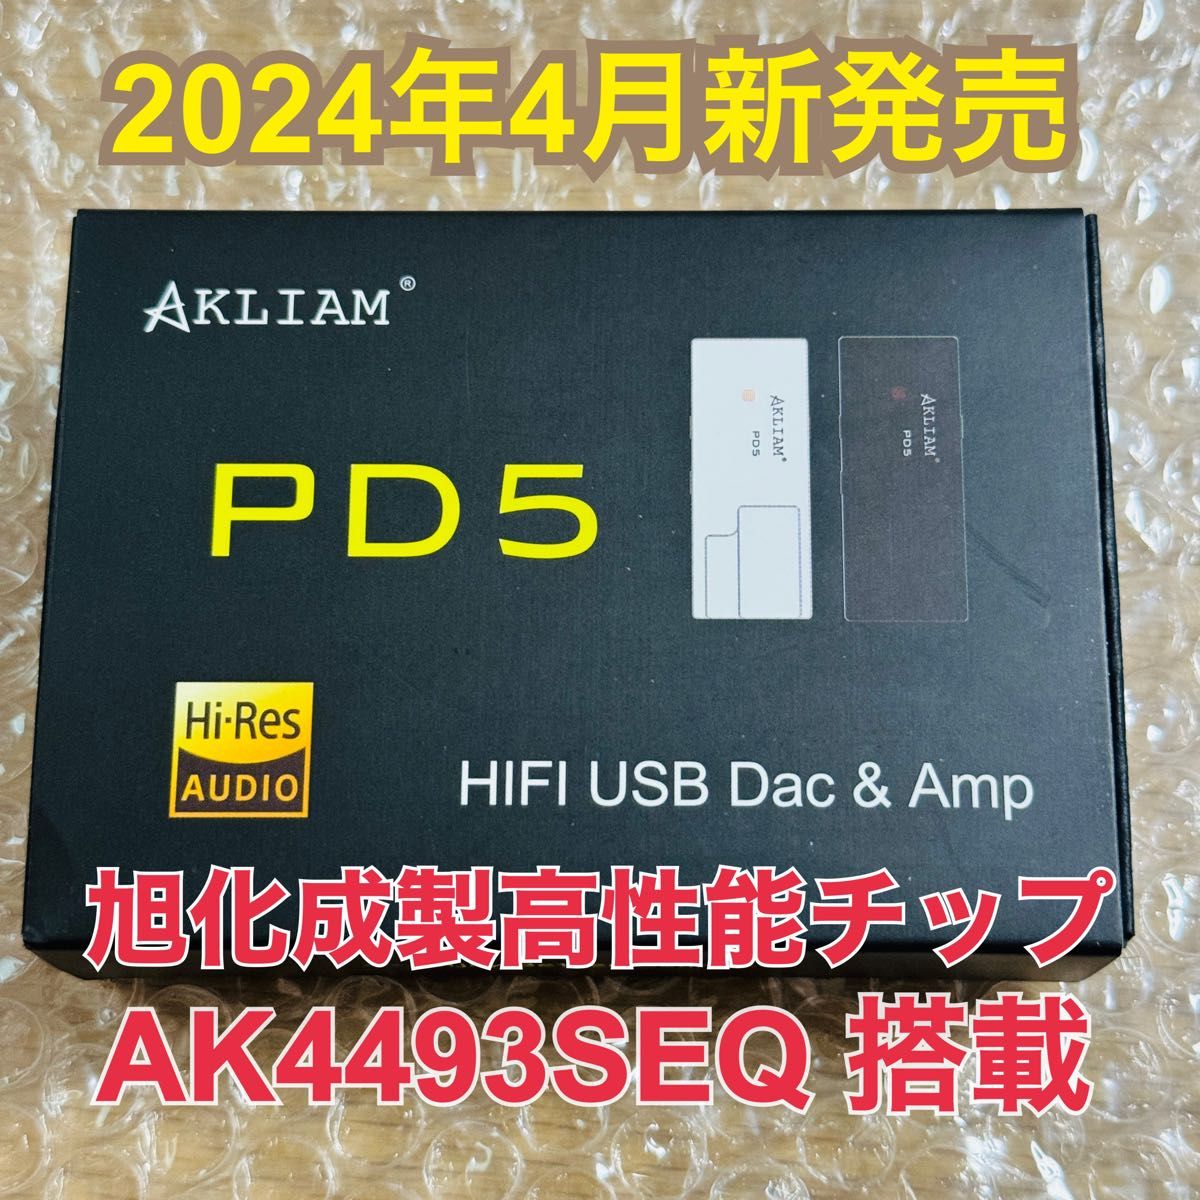 AKLIAM PD5  旭化成製高性能チップ AK4493seq ポータブル USB DAC